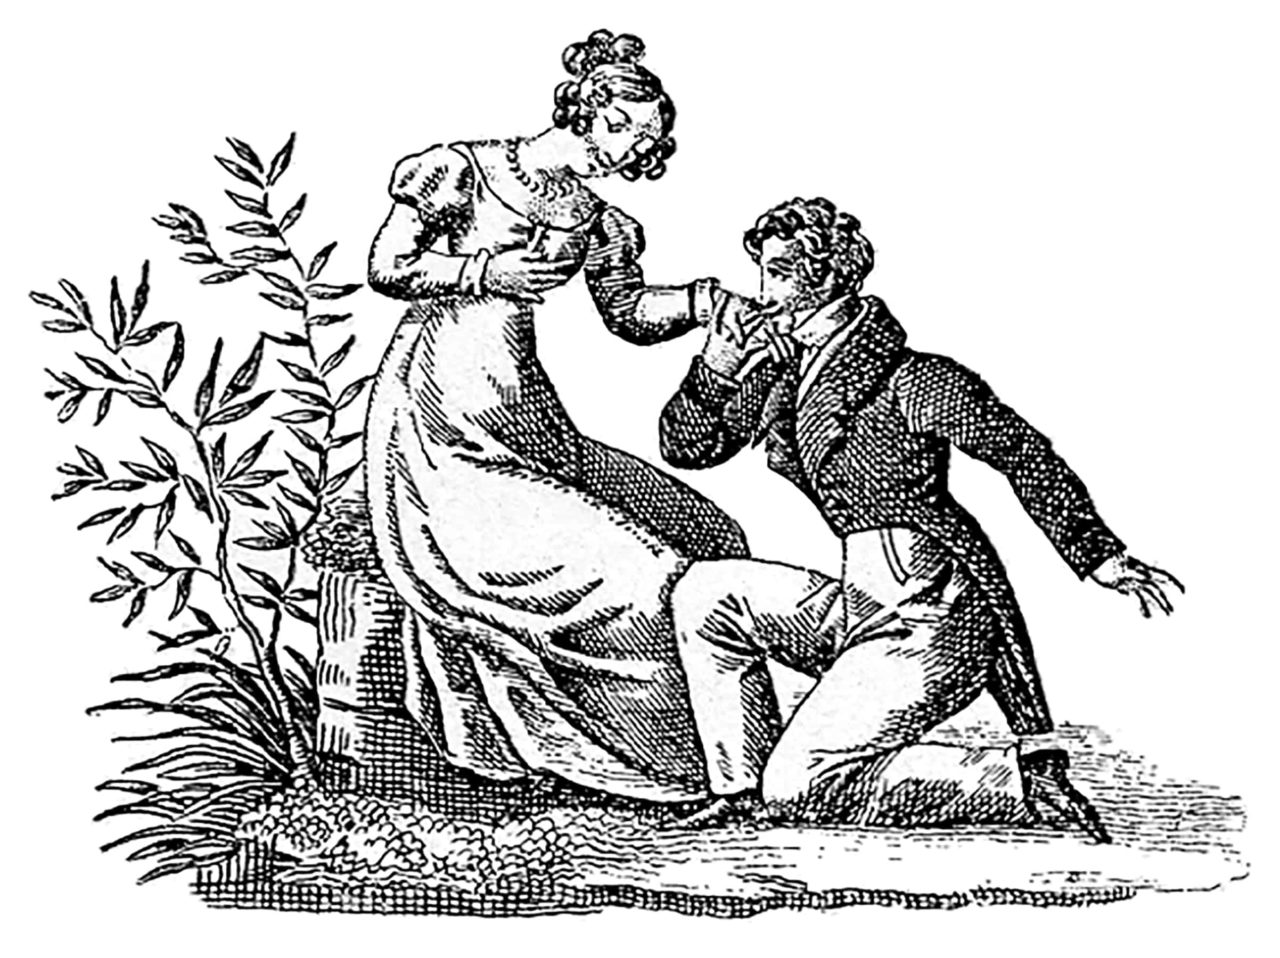 Move over Bridgerton: Here Come the Creators of Real Regency Romance